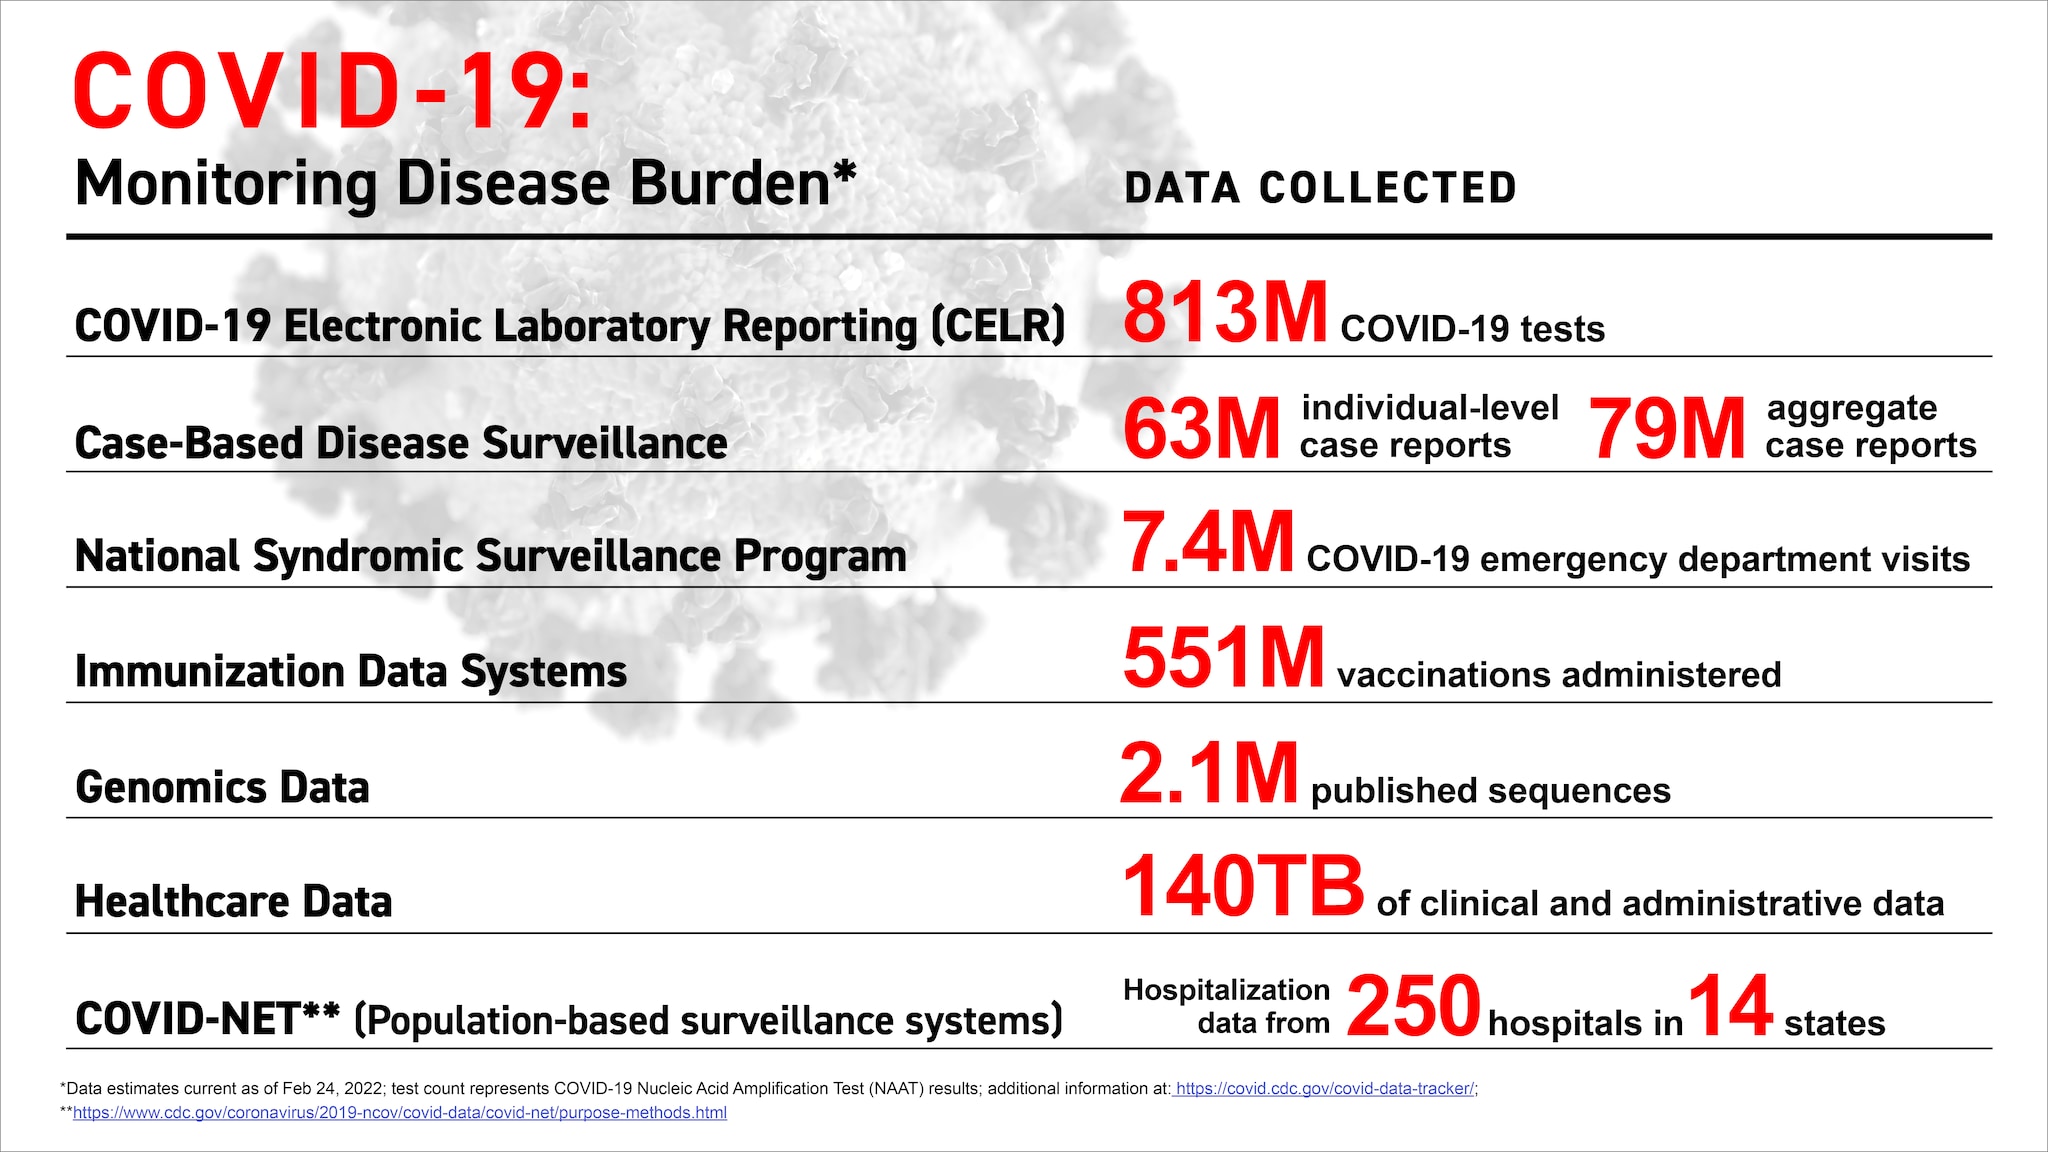 COVID-19 Monitoring Disease Burden